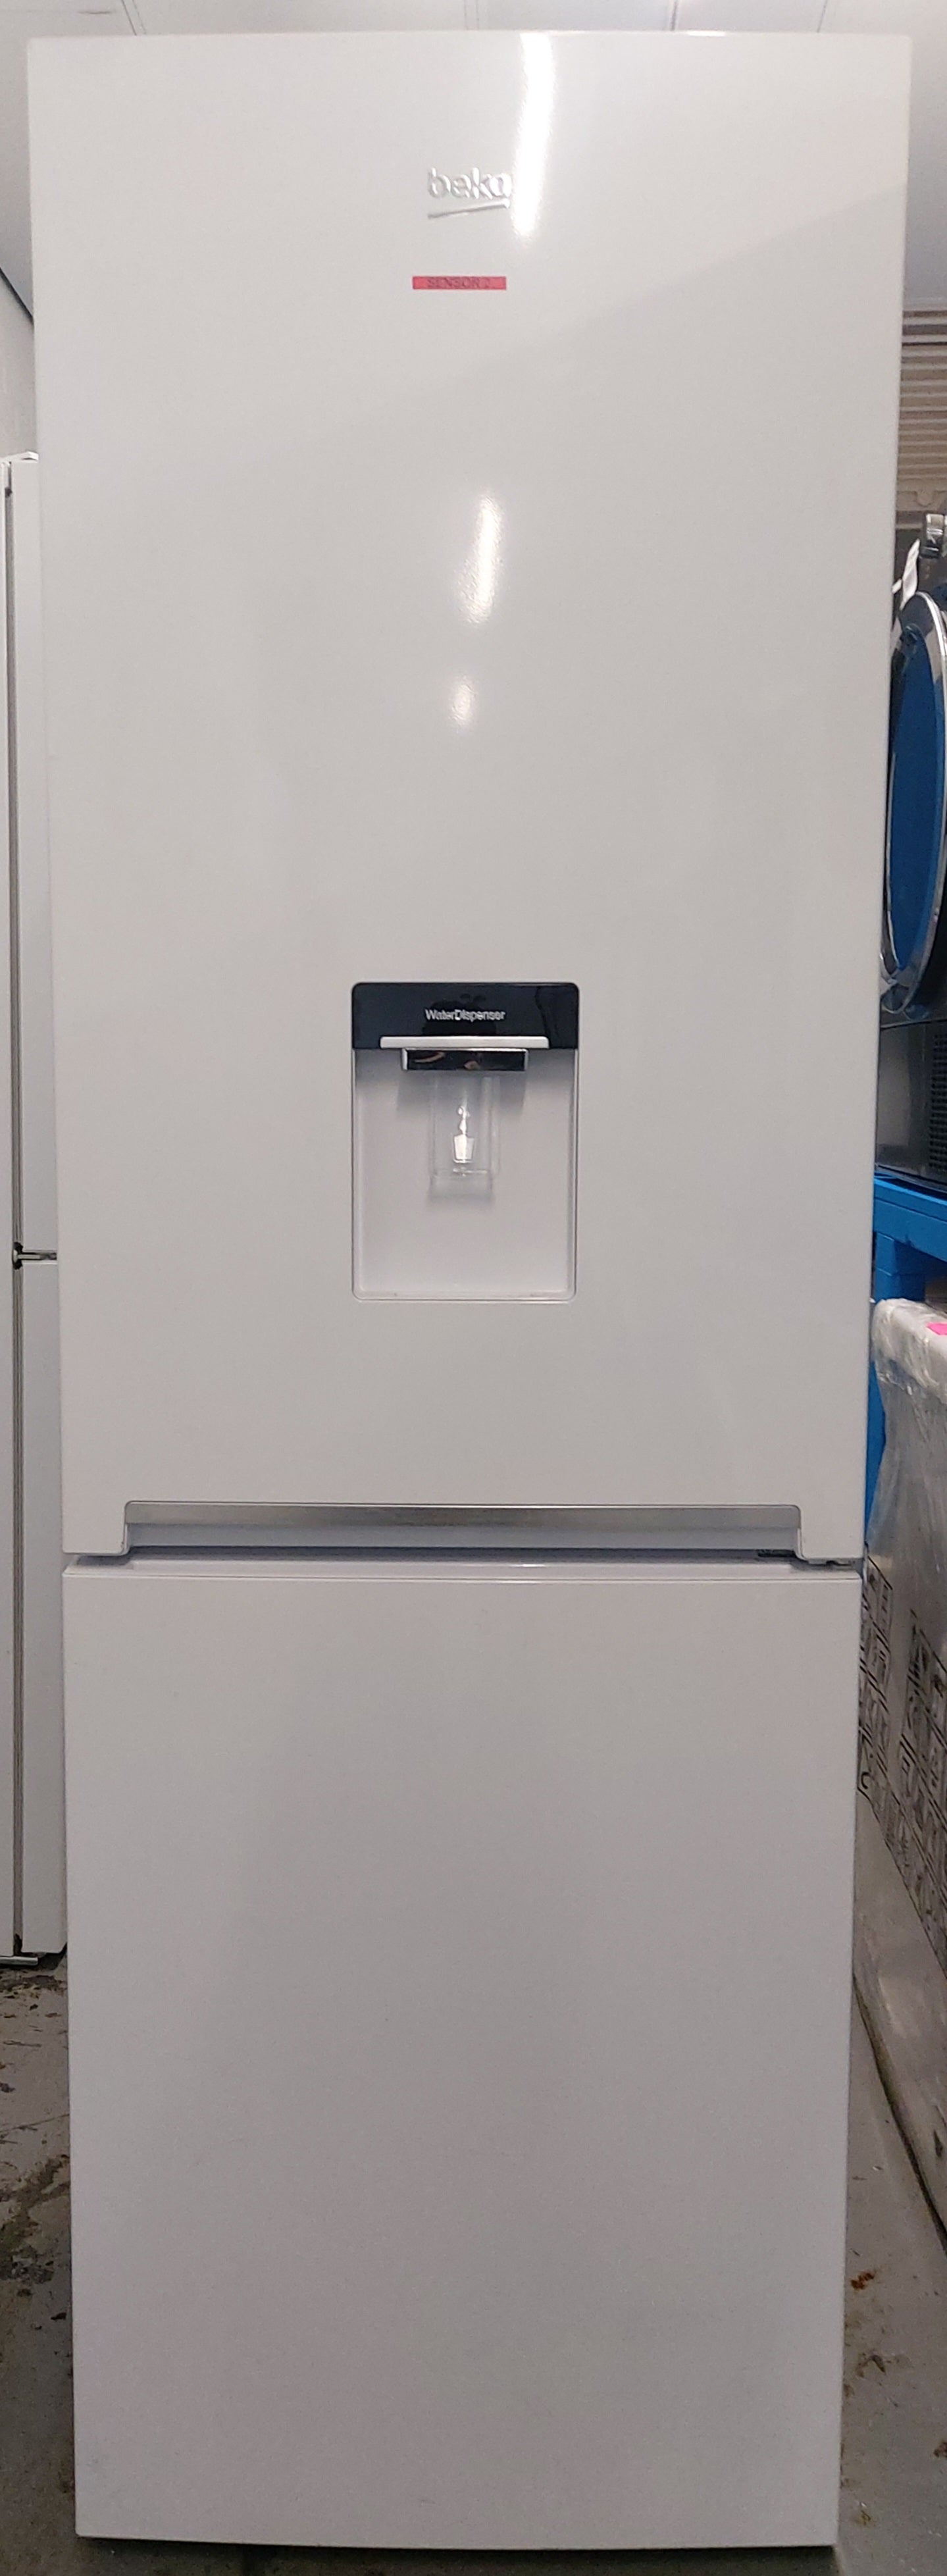 Beko CXFG1685DW Graded Fridge Freezer with Non-Plumbed Water Dispenser - Frost Free - White